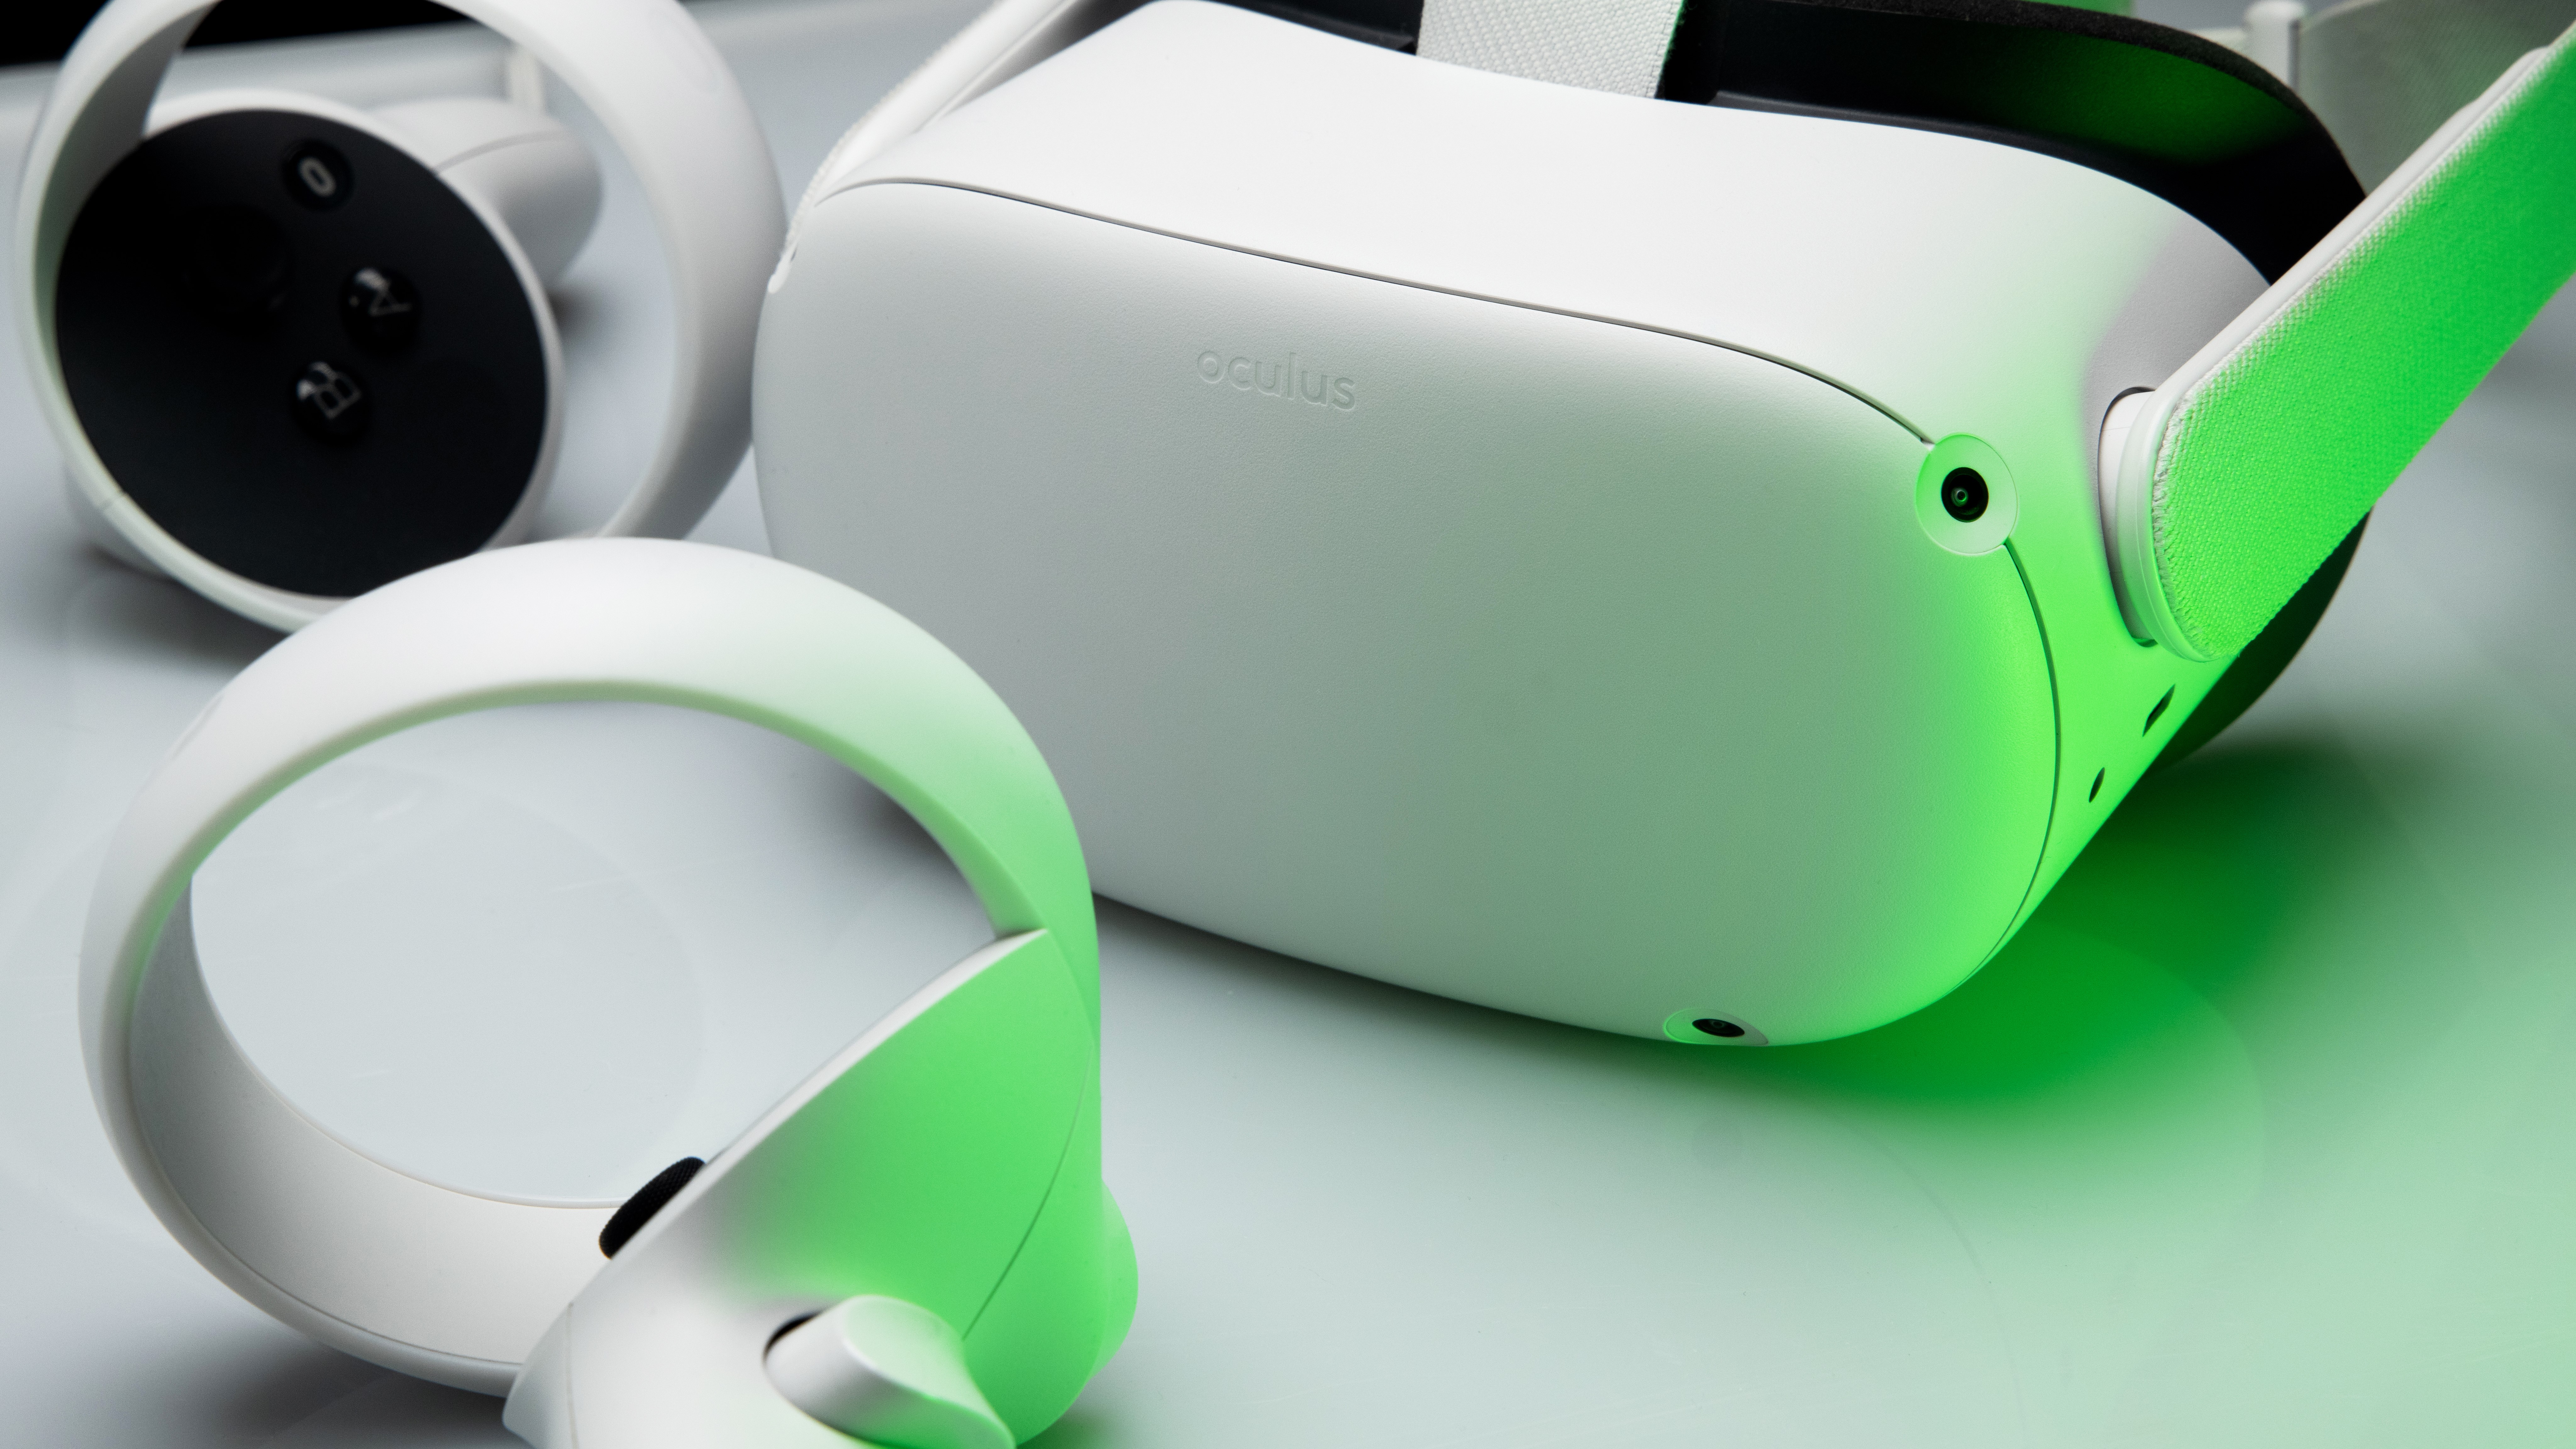 Oculus Quest 2 virtual reality headset under a green light